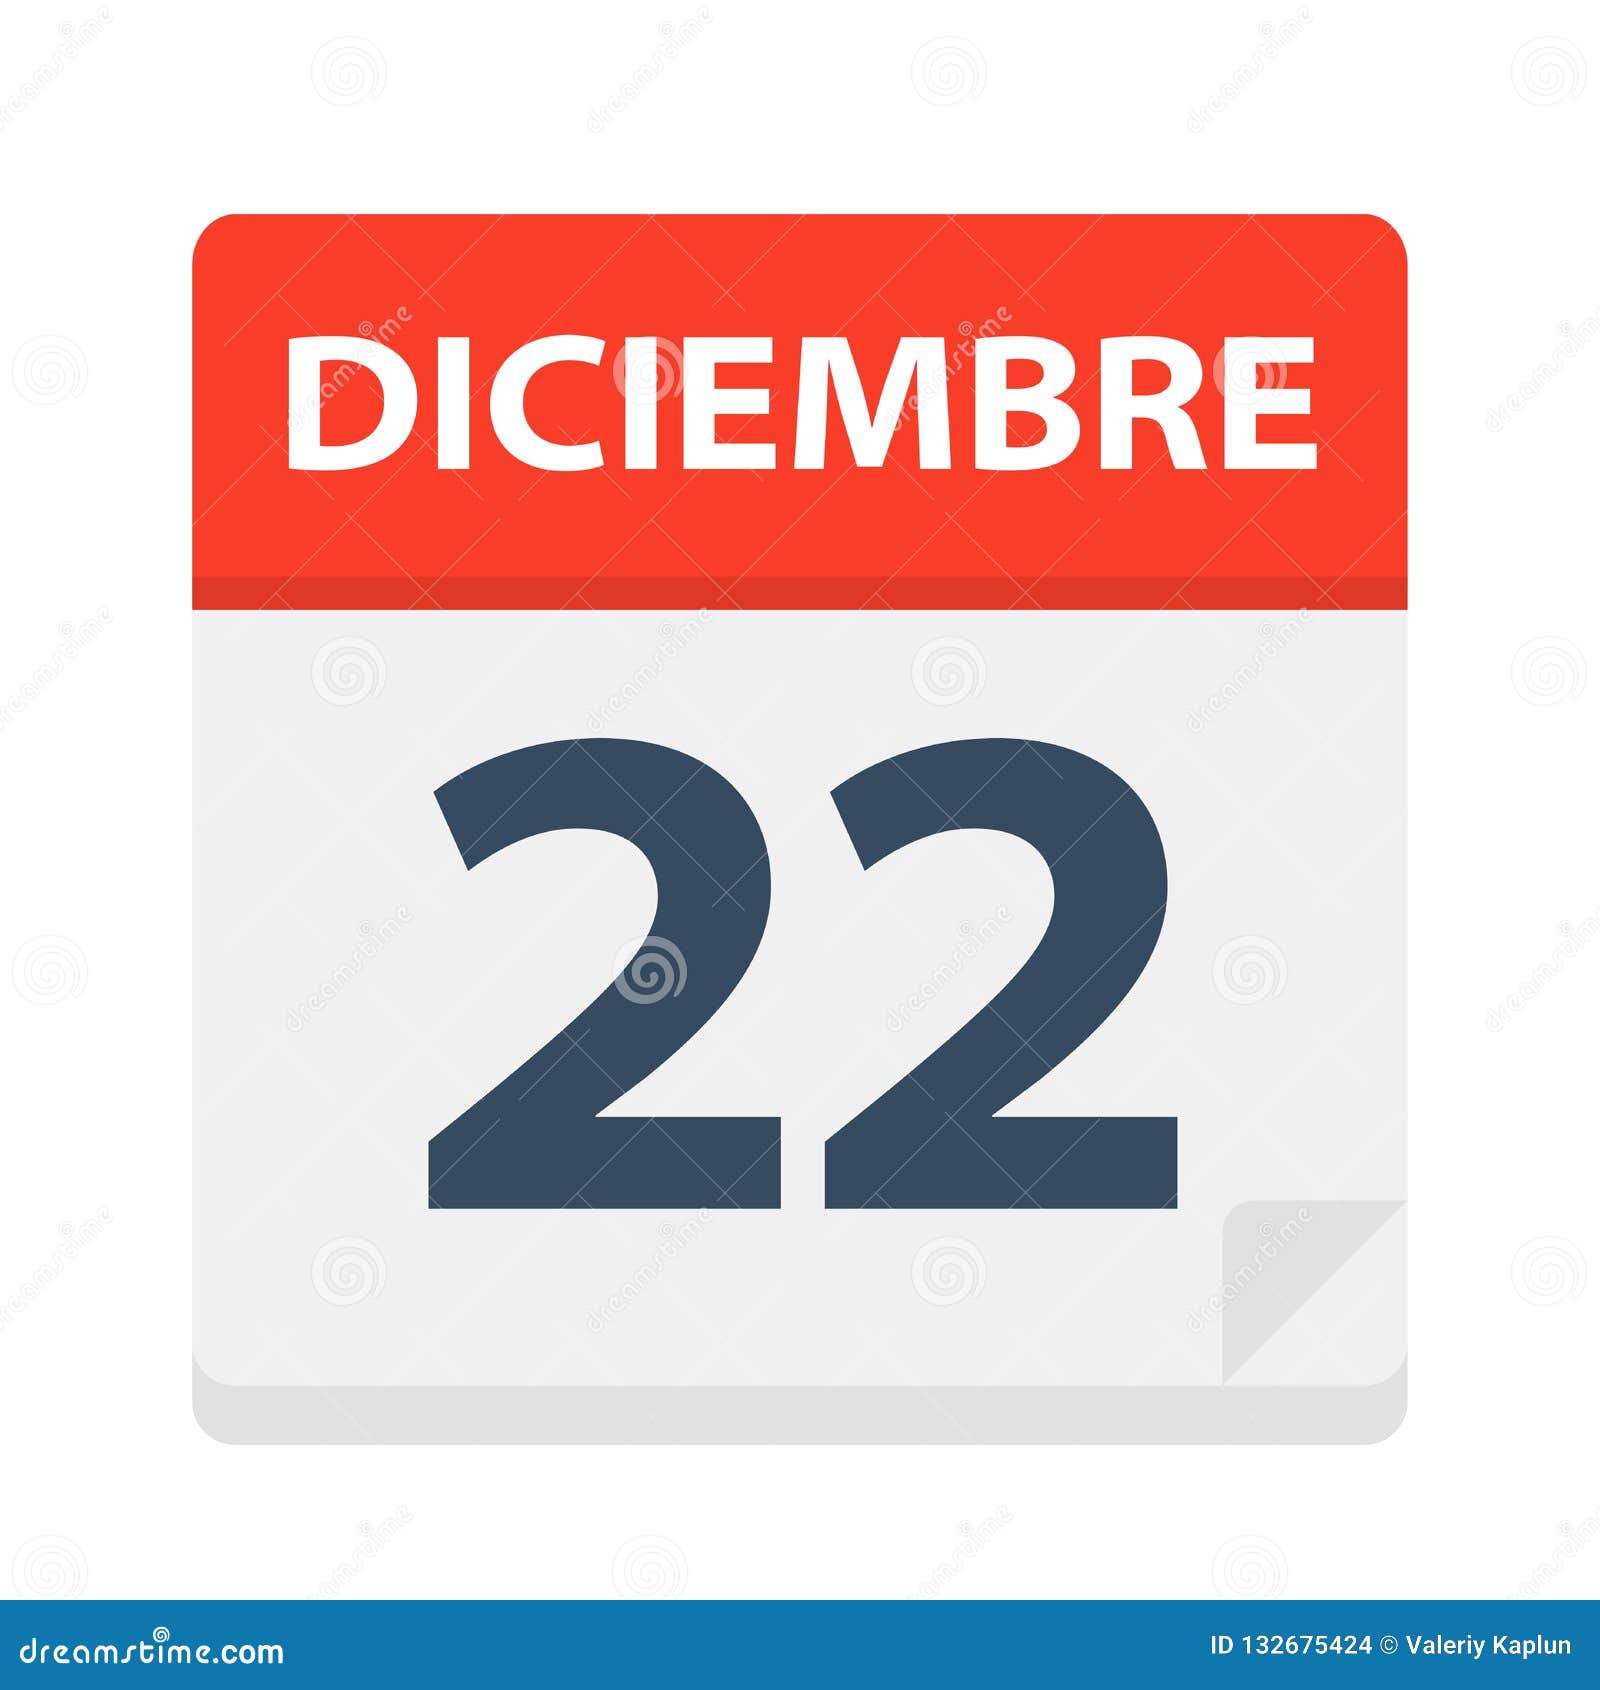 diciembre 22 - calendar icon - december 22.   of spanish calendar leaf